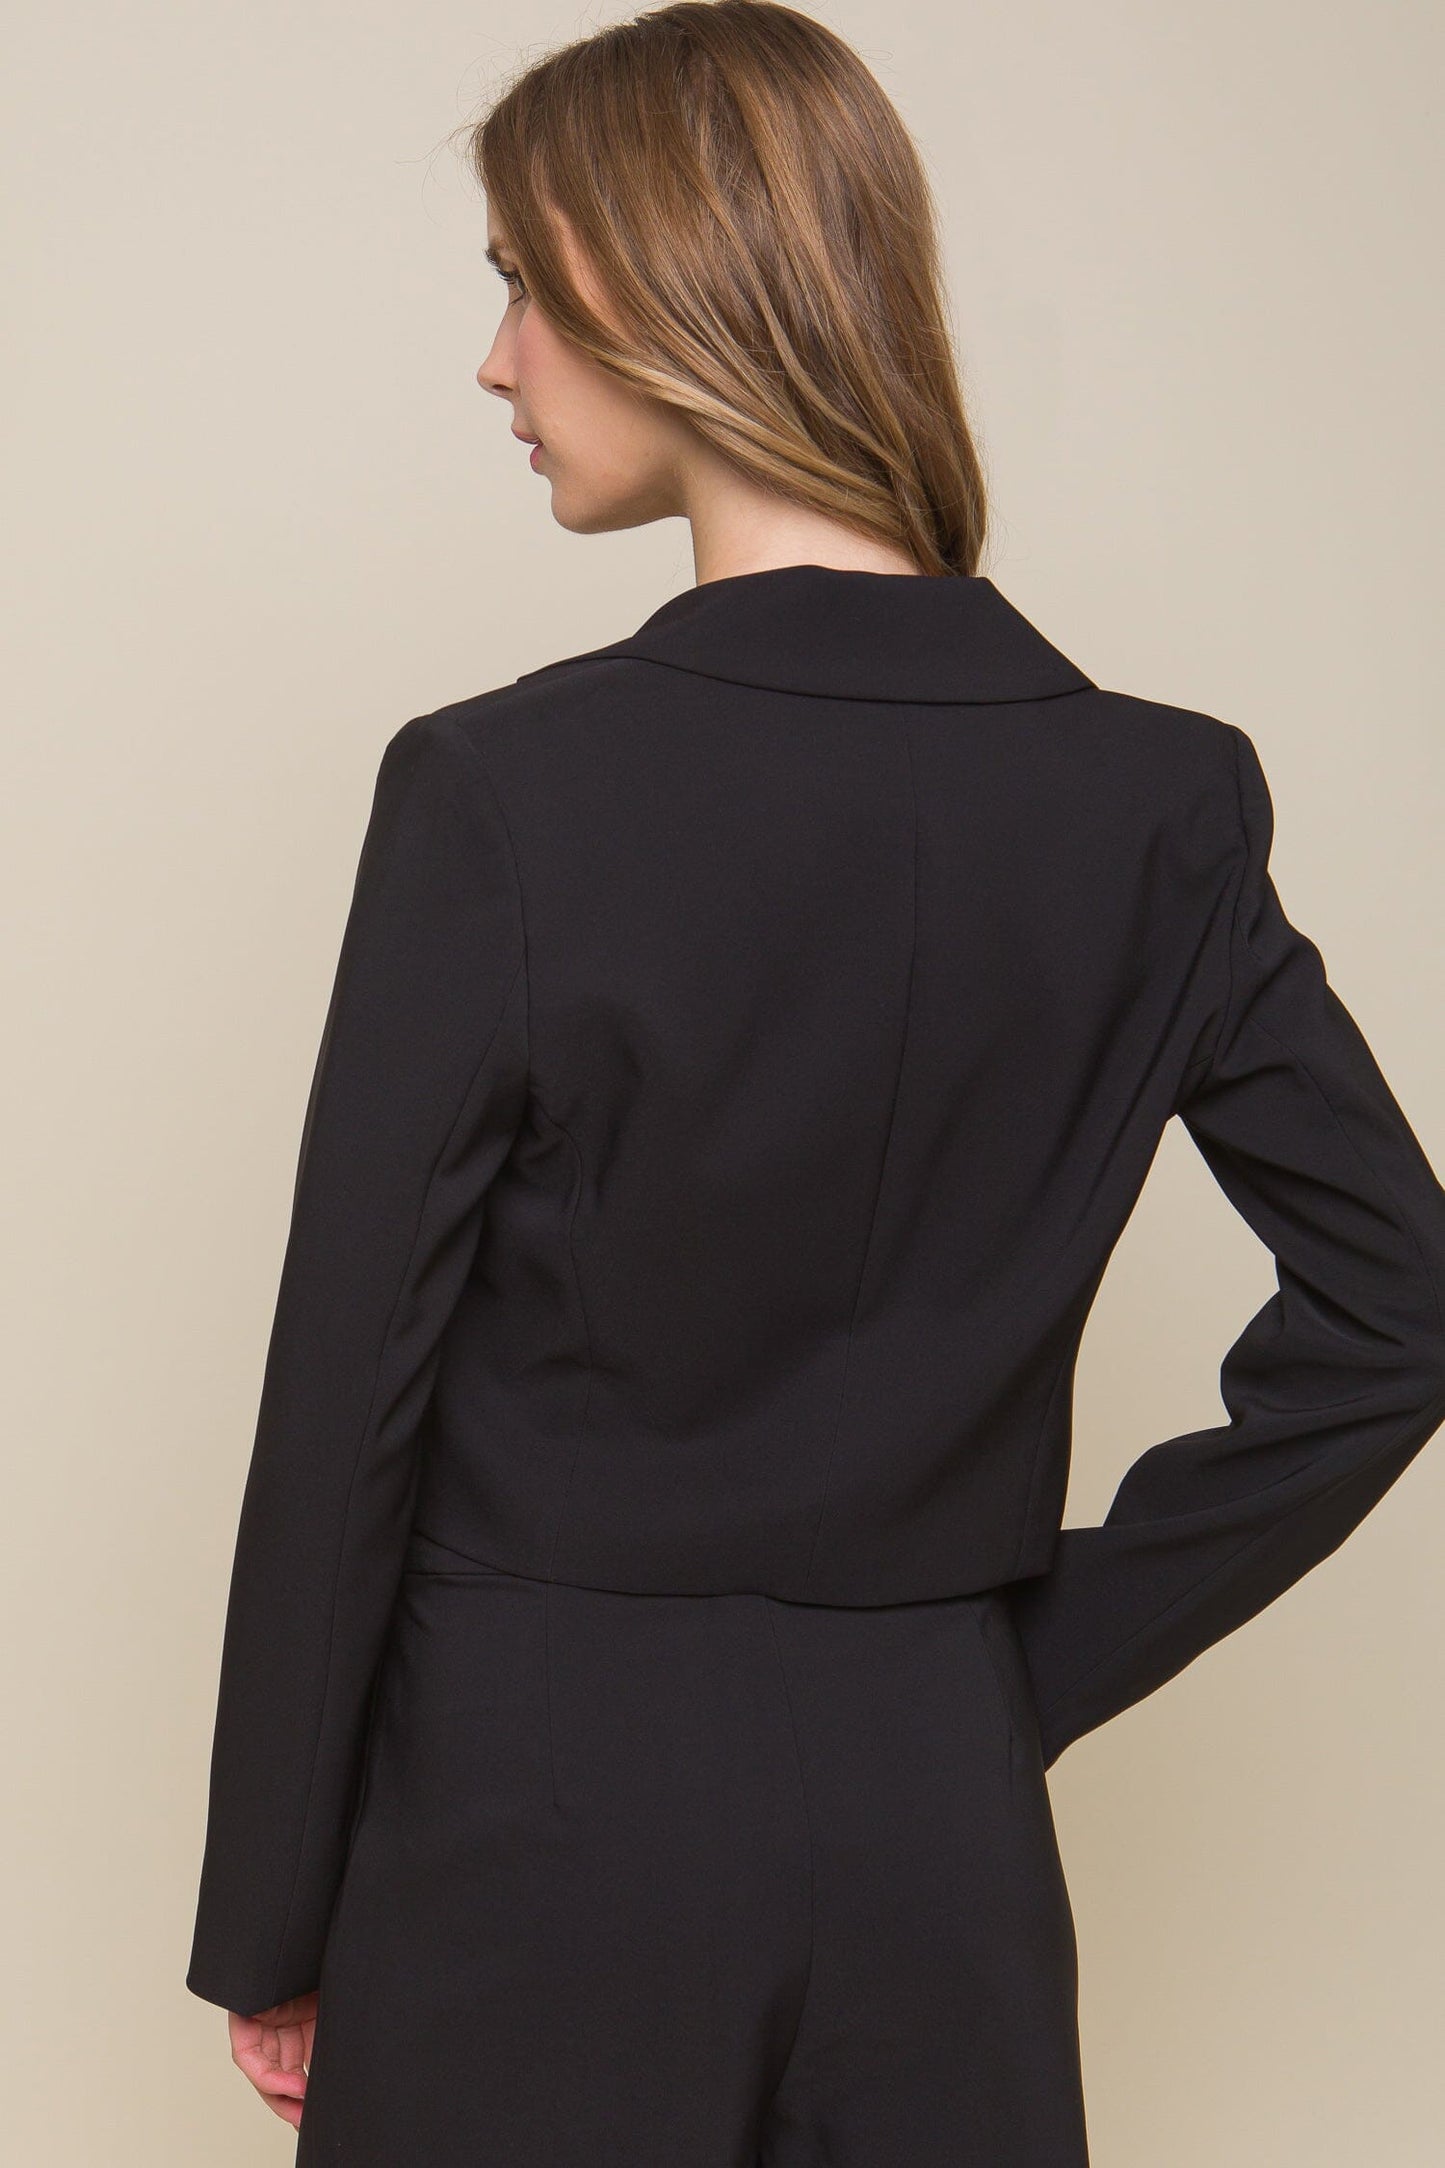 Black Lapel Neck Long Sleeve Open Front Casual Business Work Cropped Blazer Jacket jehouze 